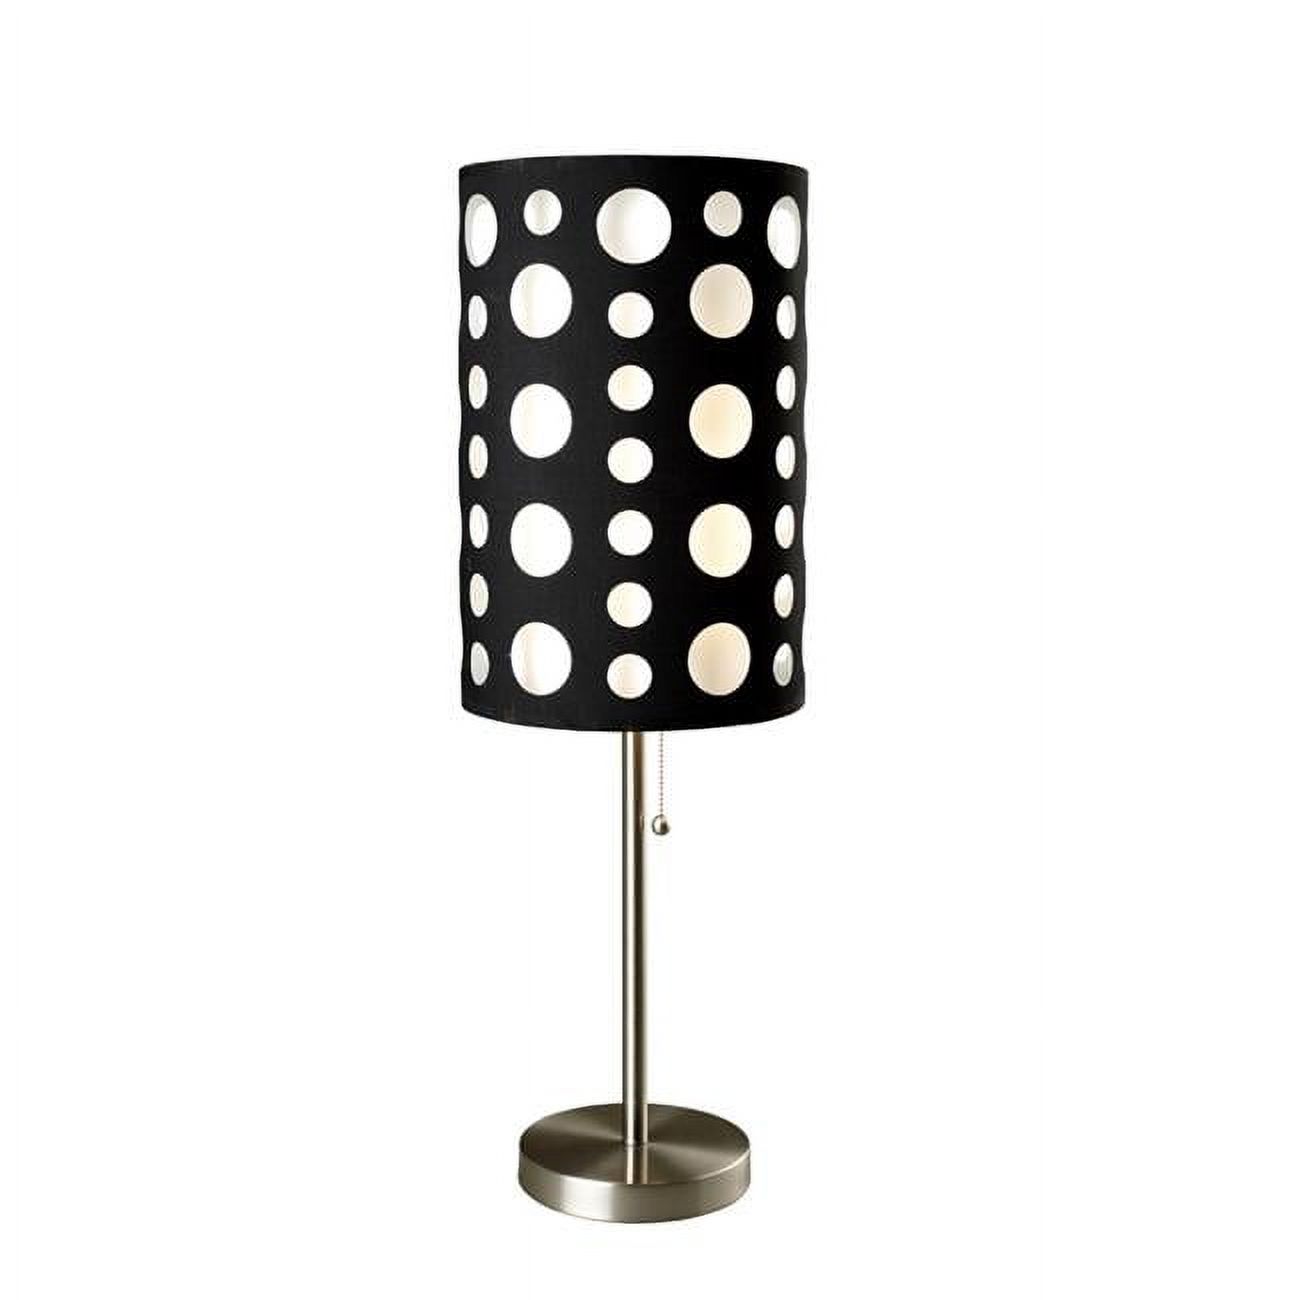 33 in. Modern Retro Black-white Table Lamp - image 1 of 1